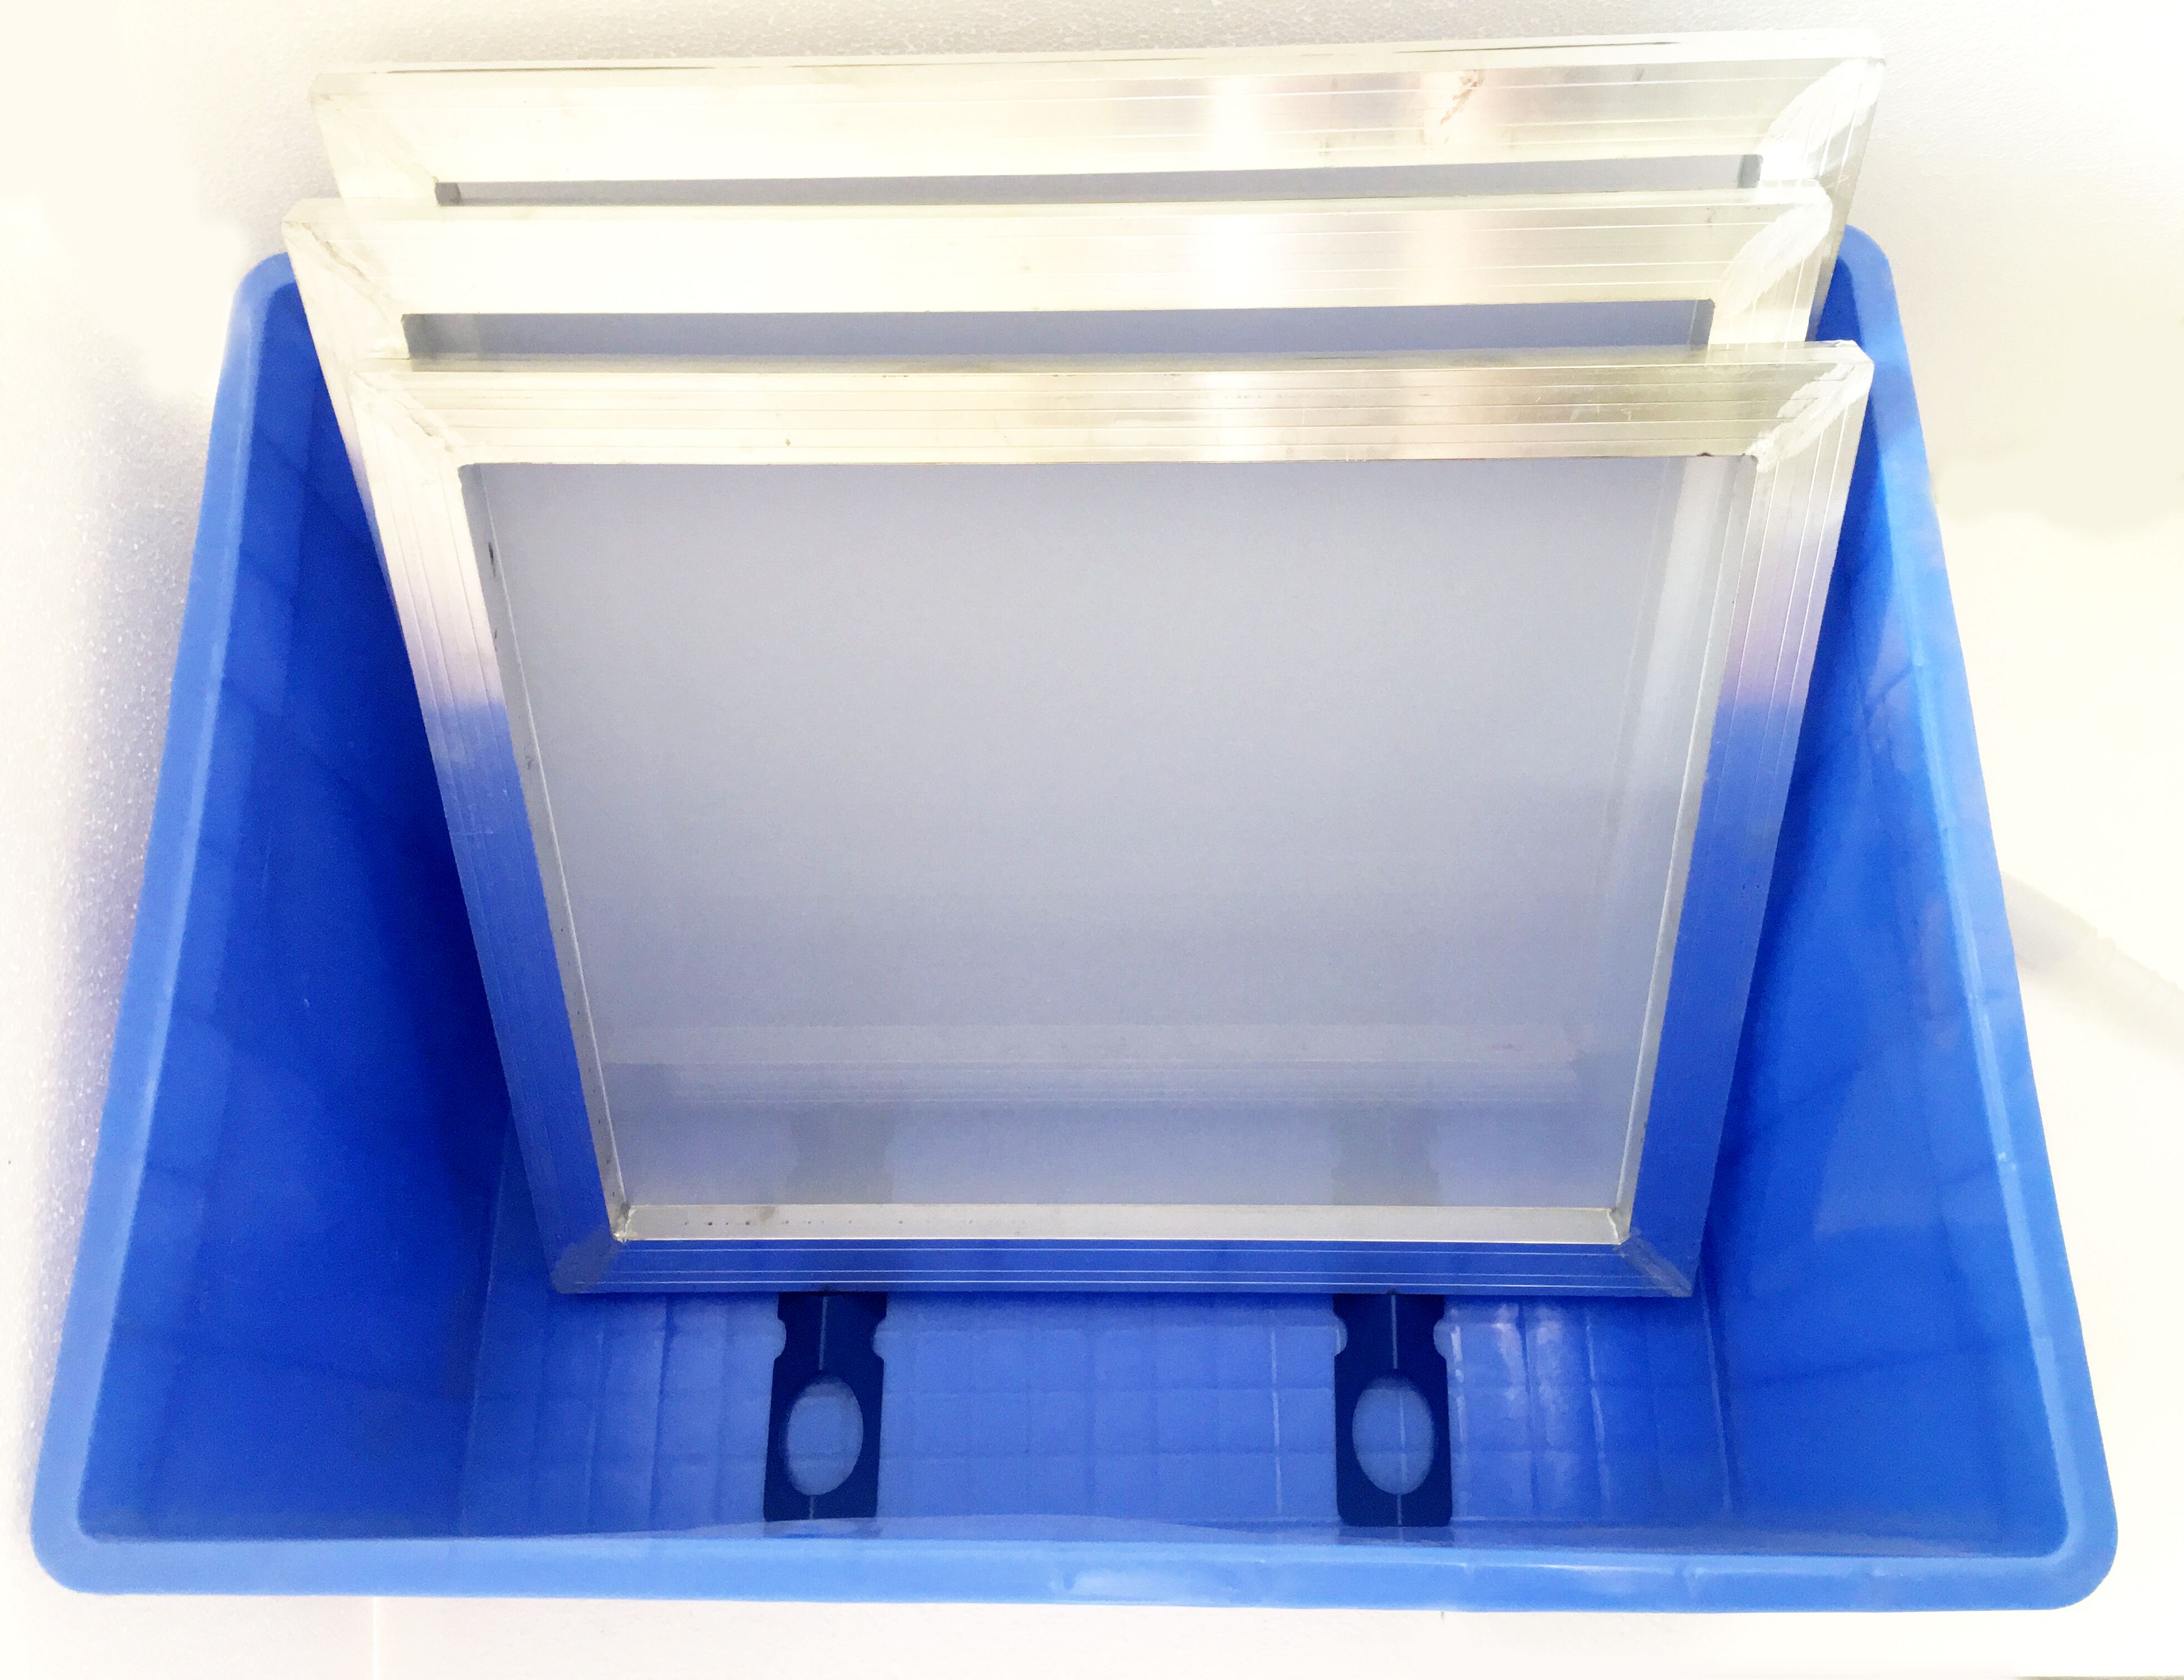 Techtongda Screen Printing Washout Booth Tank Screen Washing #006008 - image 4 of 4